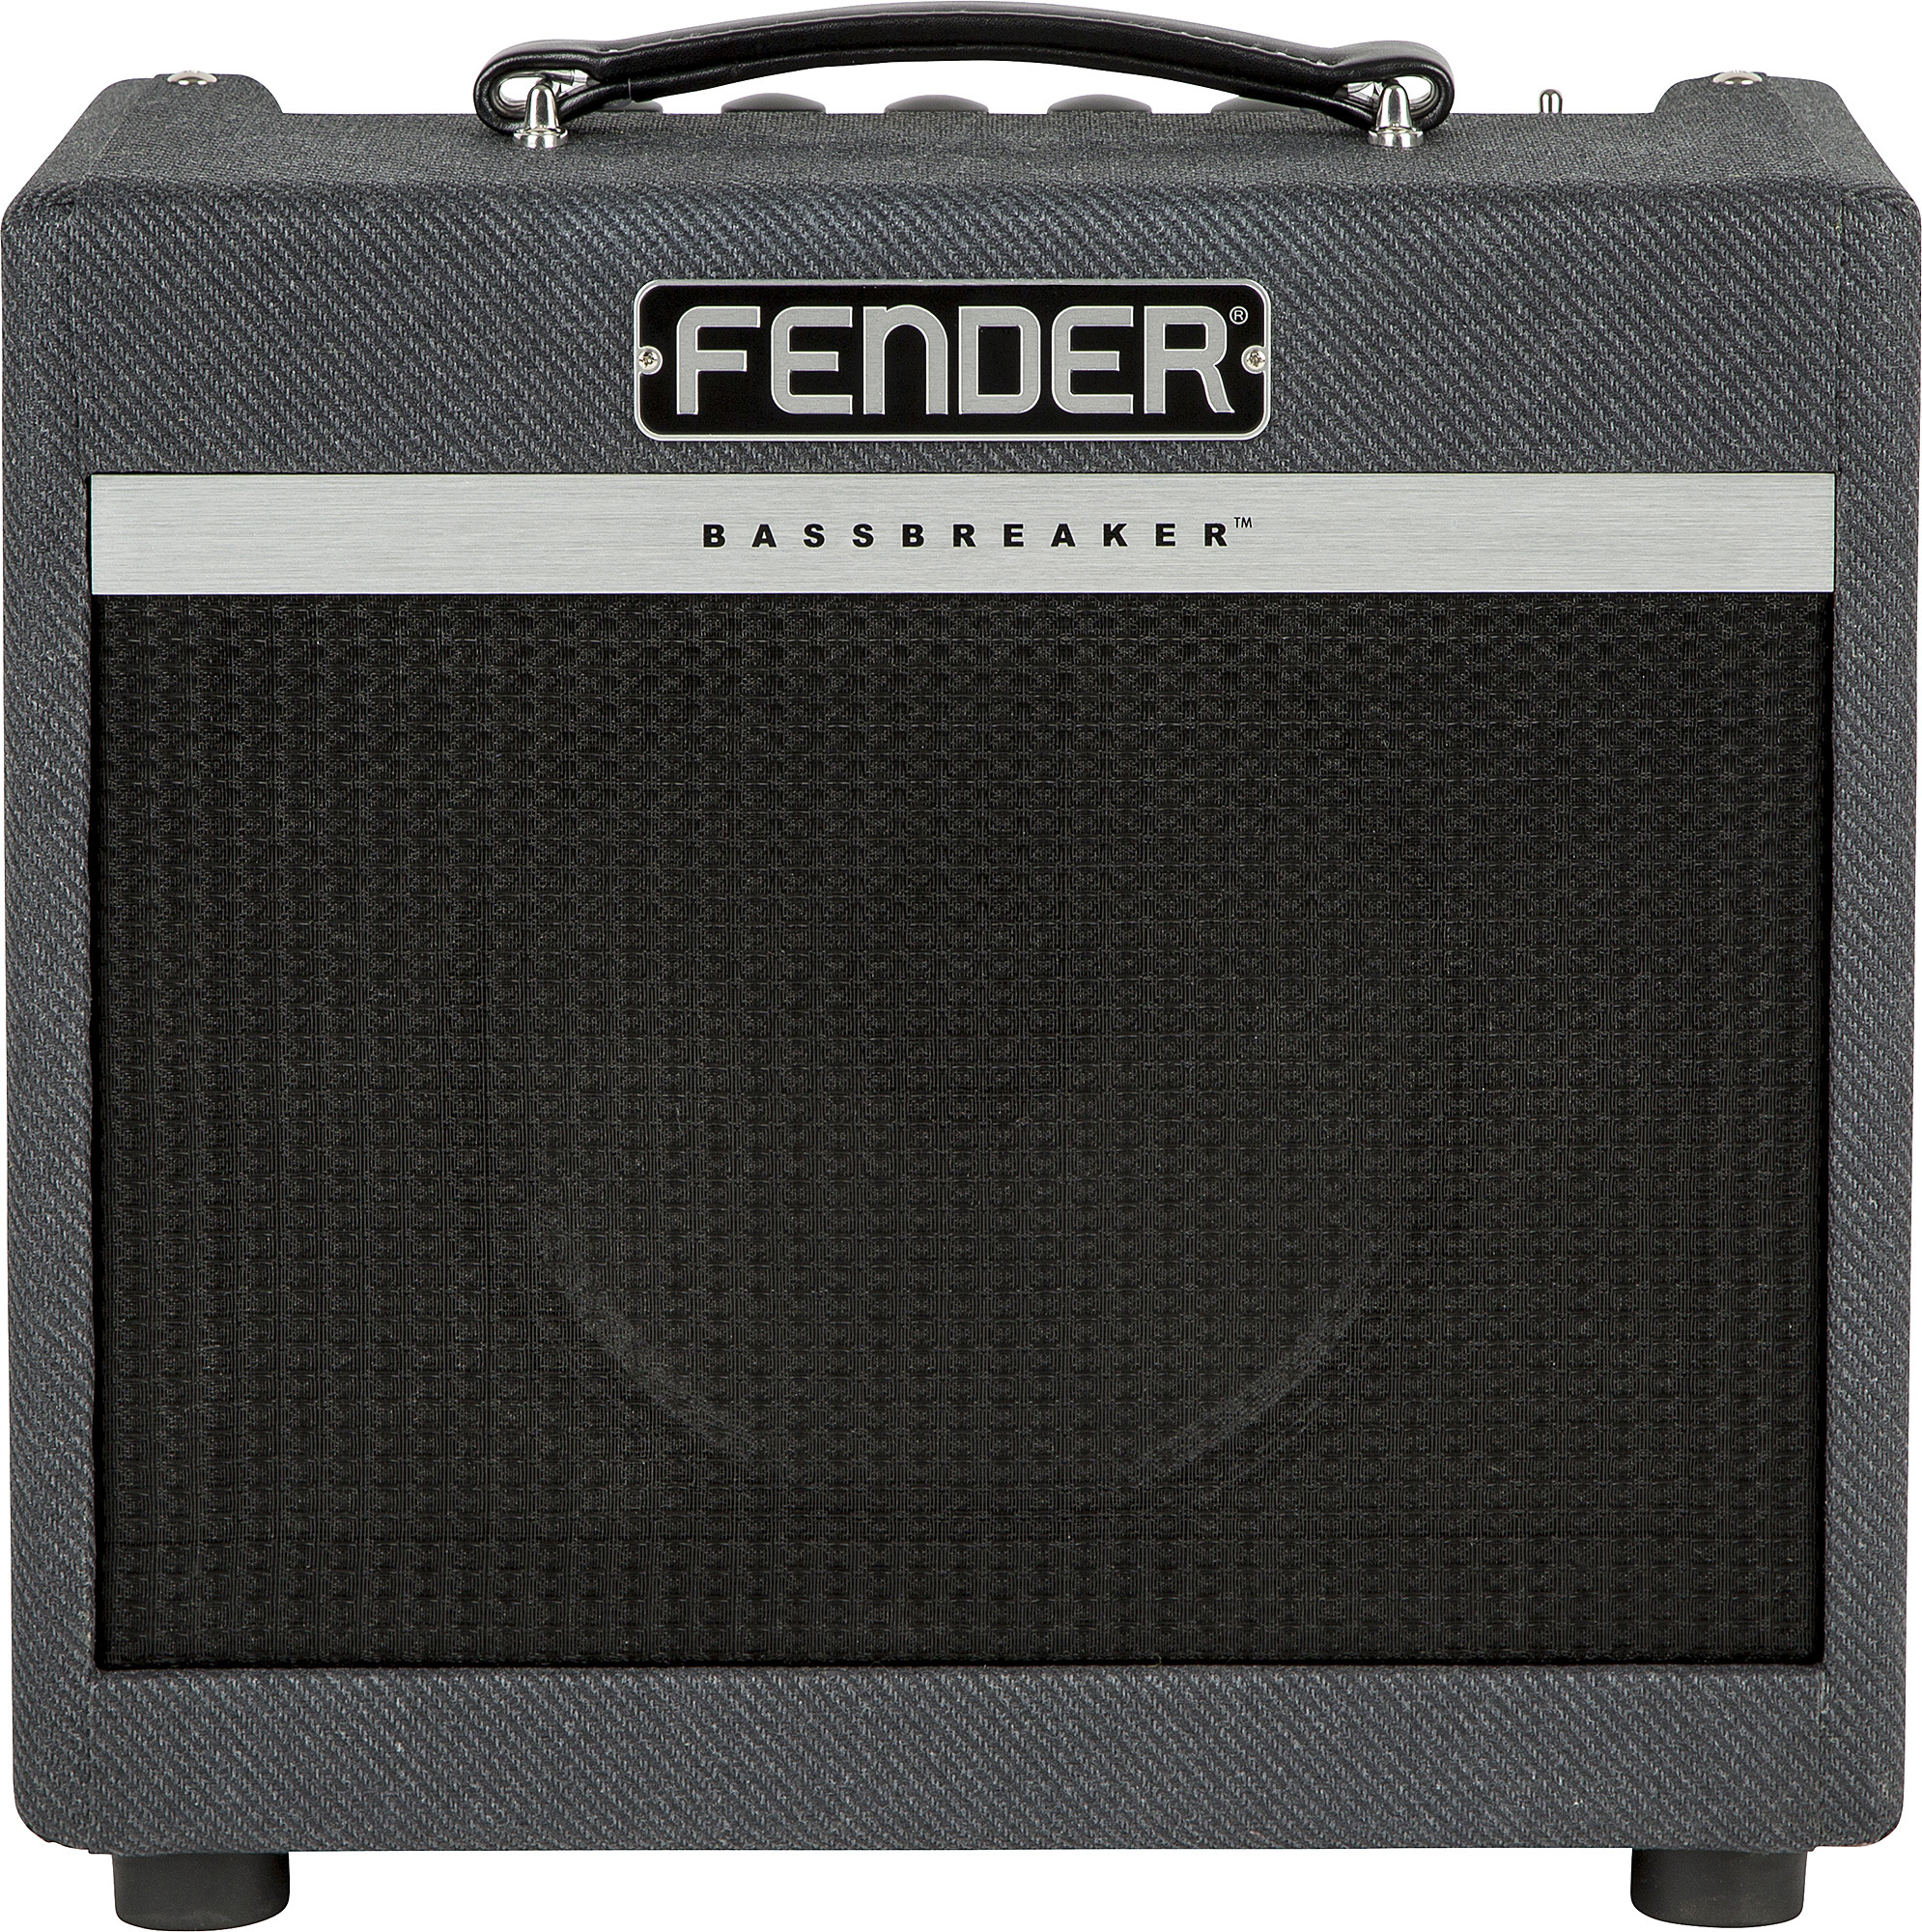 Fender Bassbreaker 007 Combo 7w 1x10 Gray Tweed - Electric guitar combo amp - Main picture